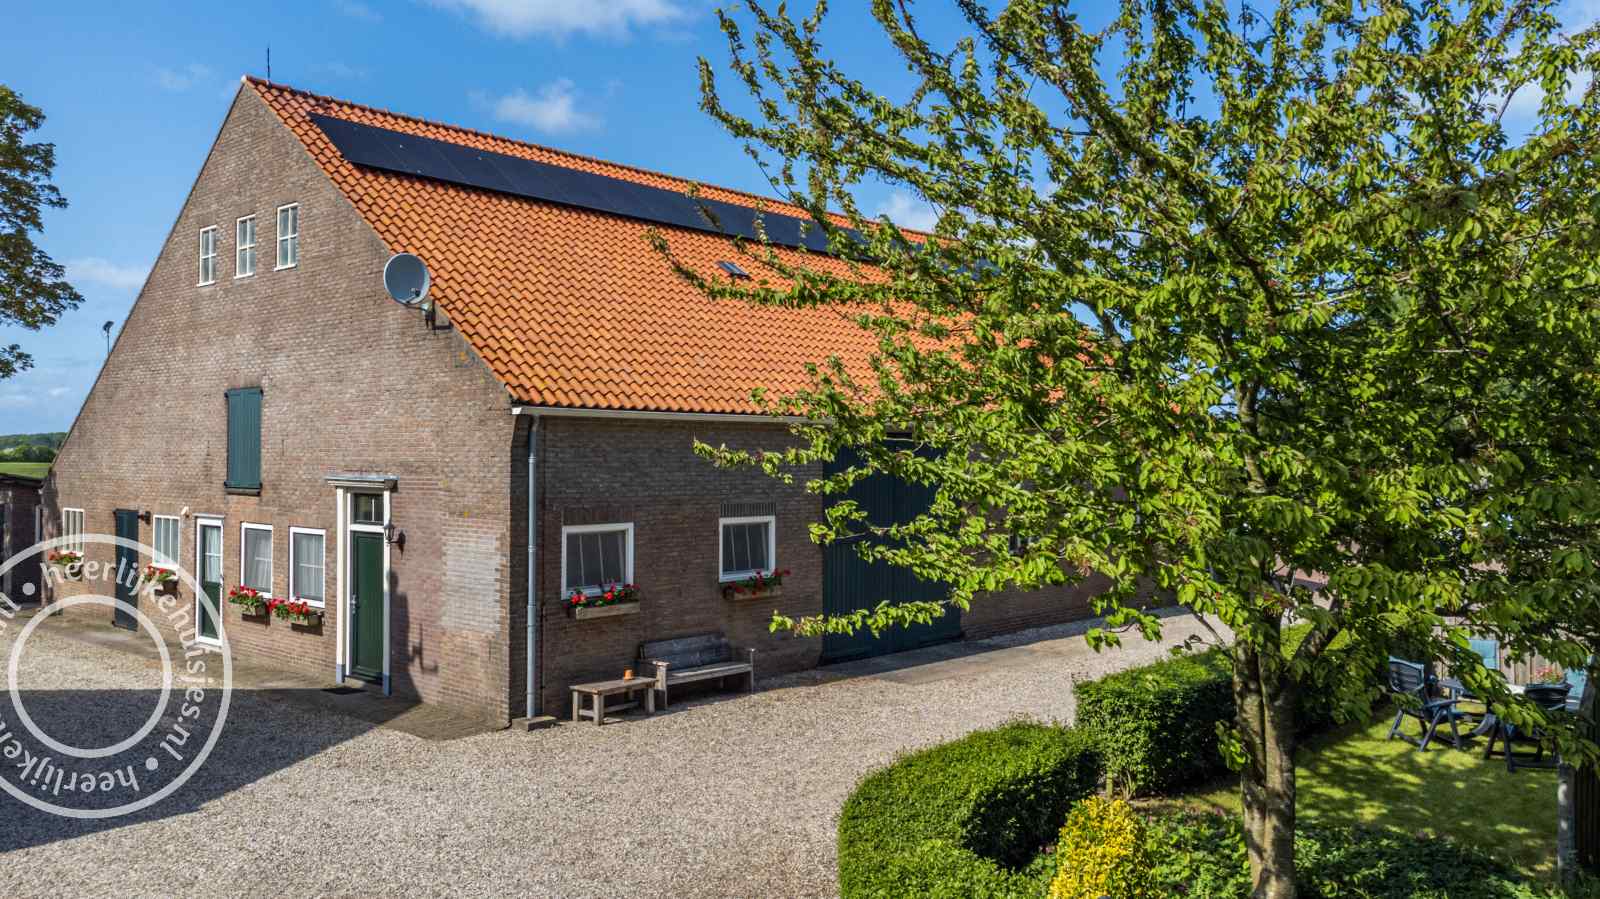 Gezellige 4 persoons vakantiehuis in Oostkapelle - Nederland - Europa - Oostkapelle